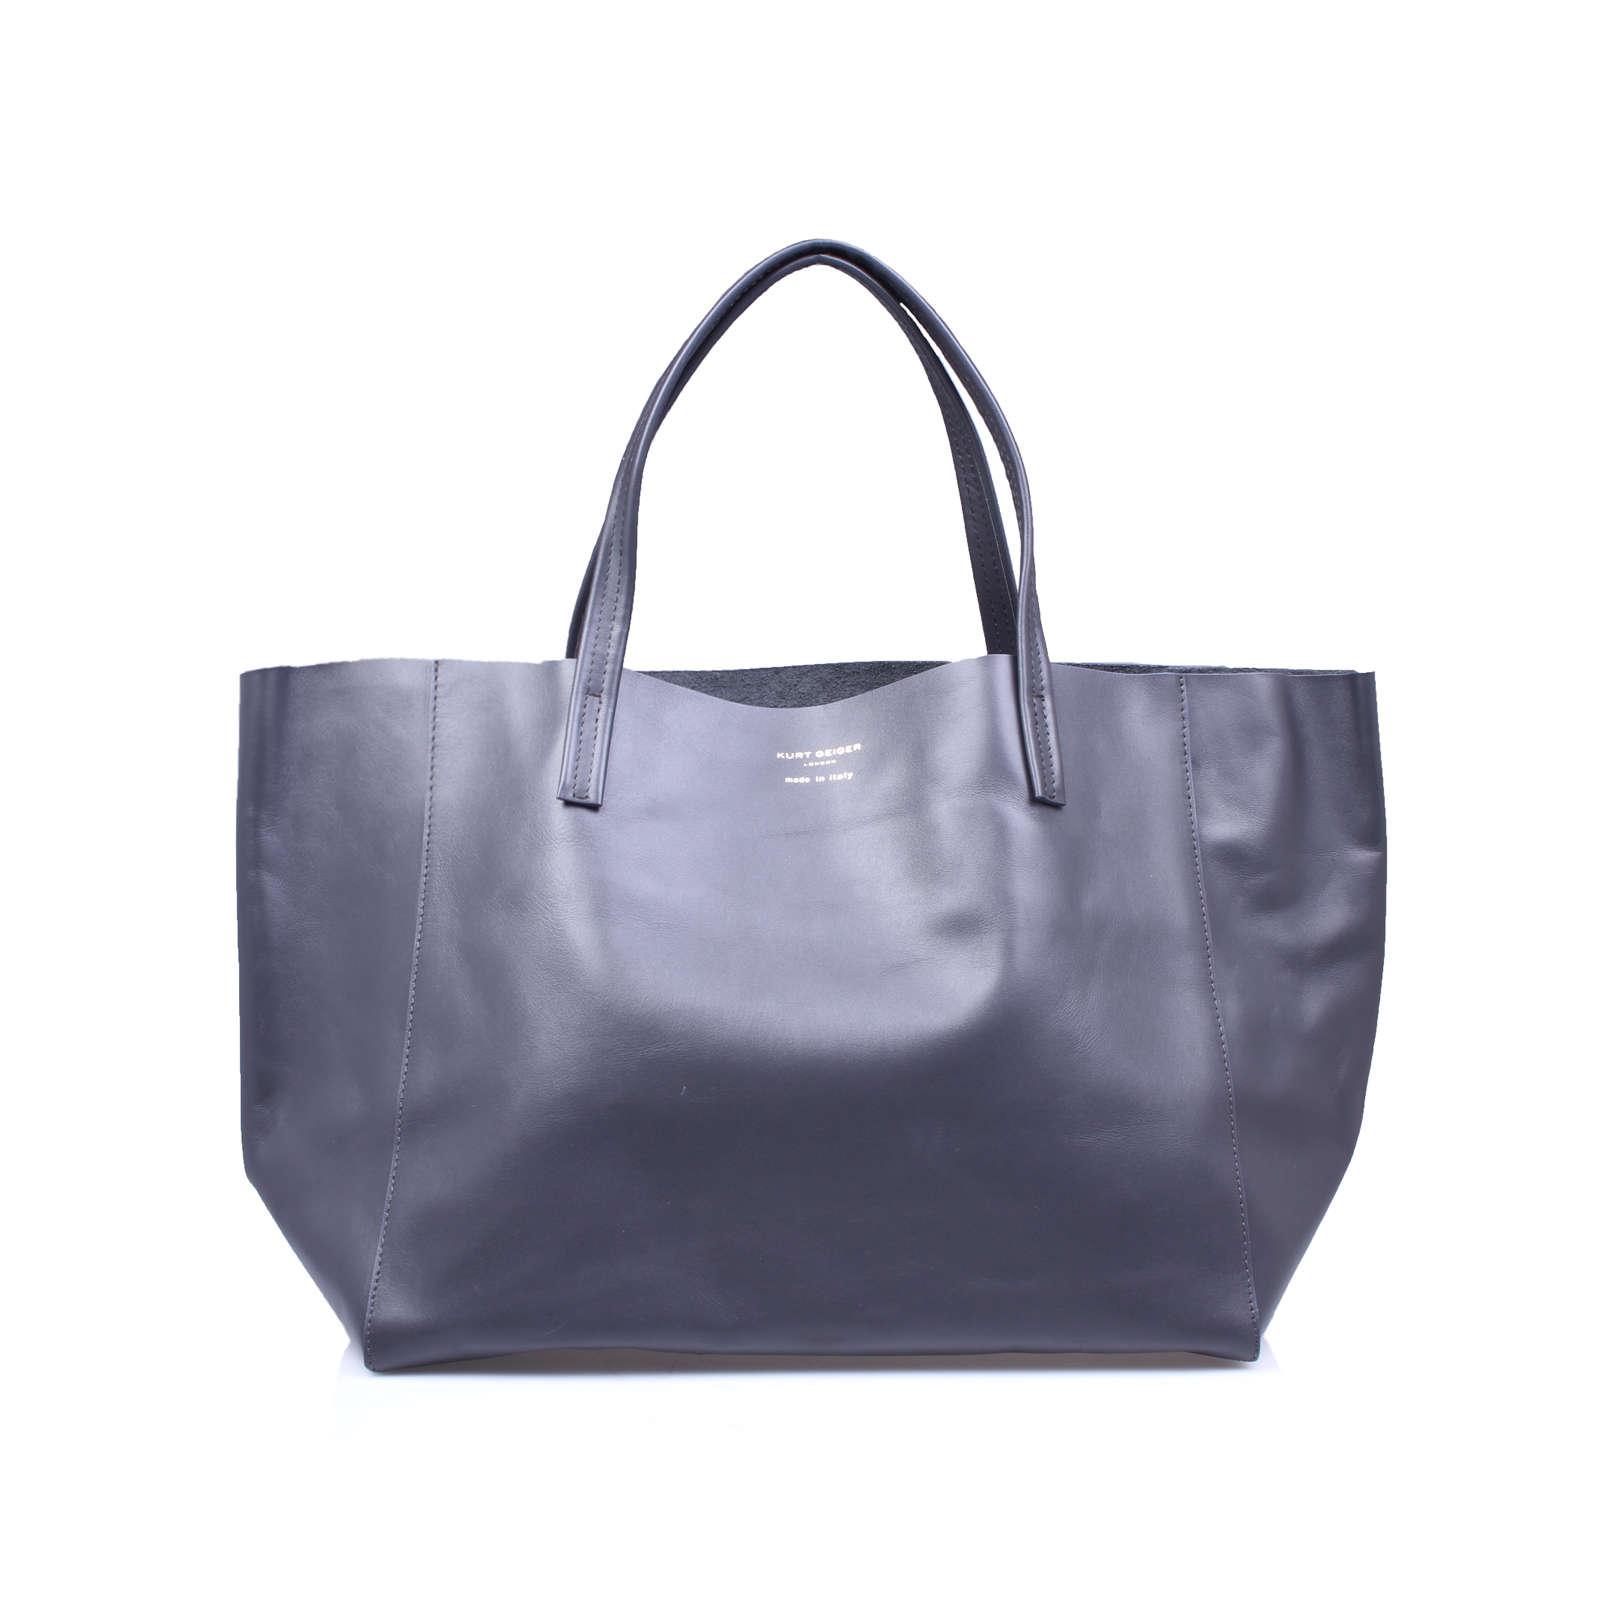 Kurt Geiger Violet Horizontal Grey Leather Day Bag in Grey - Lyst